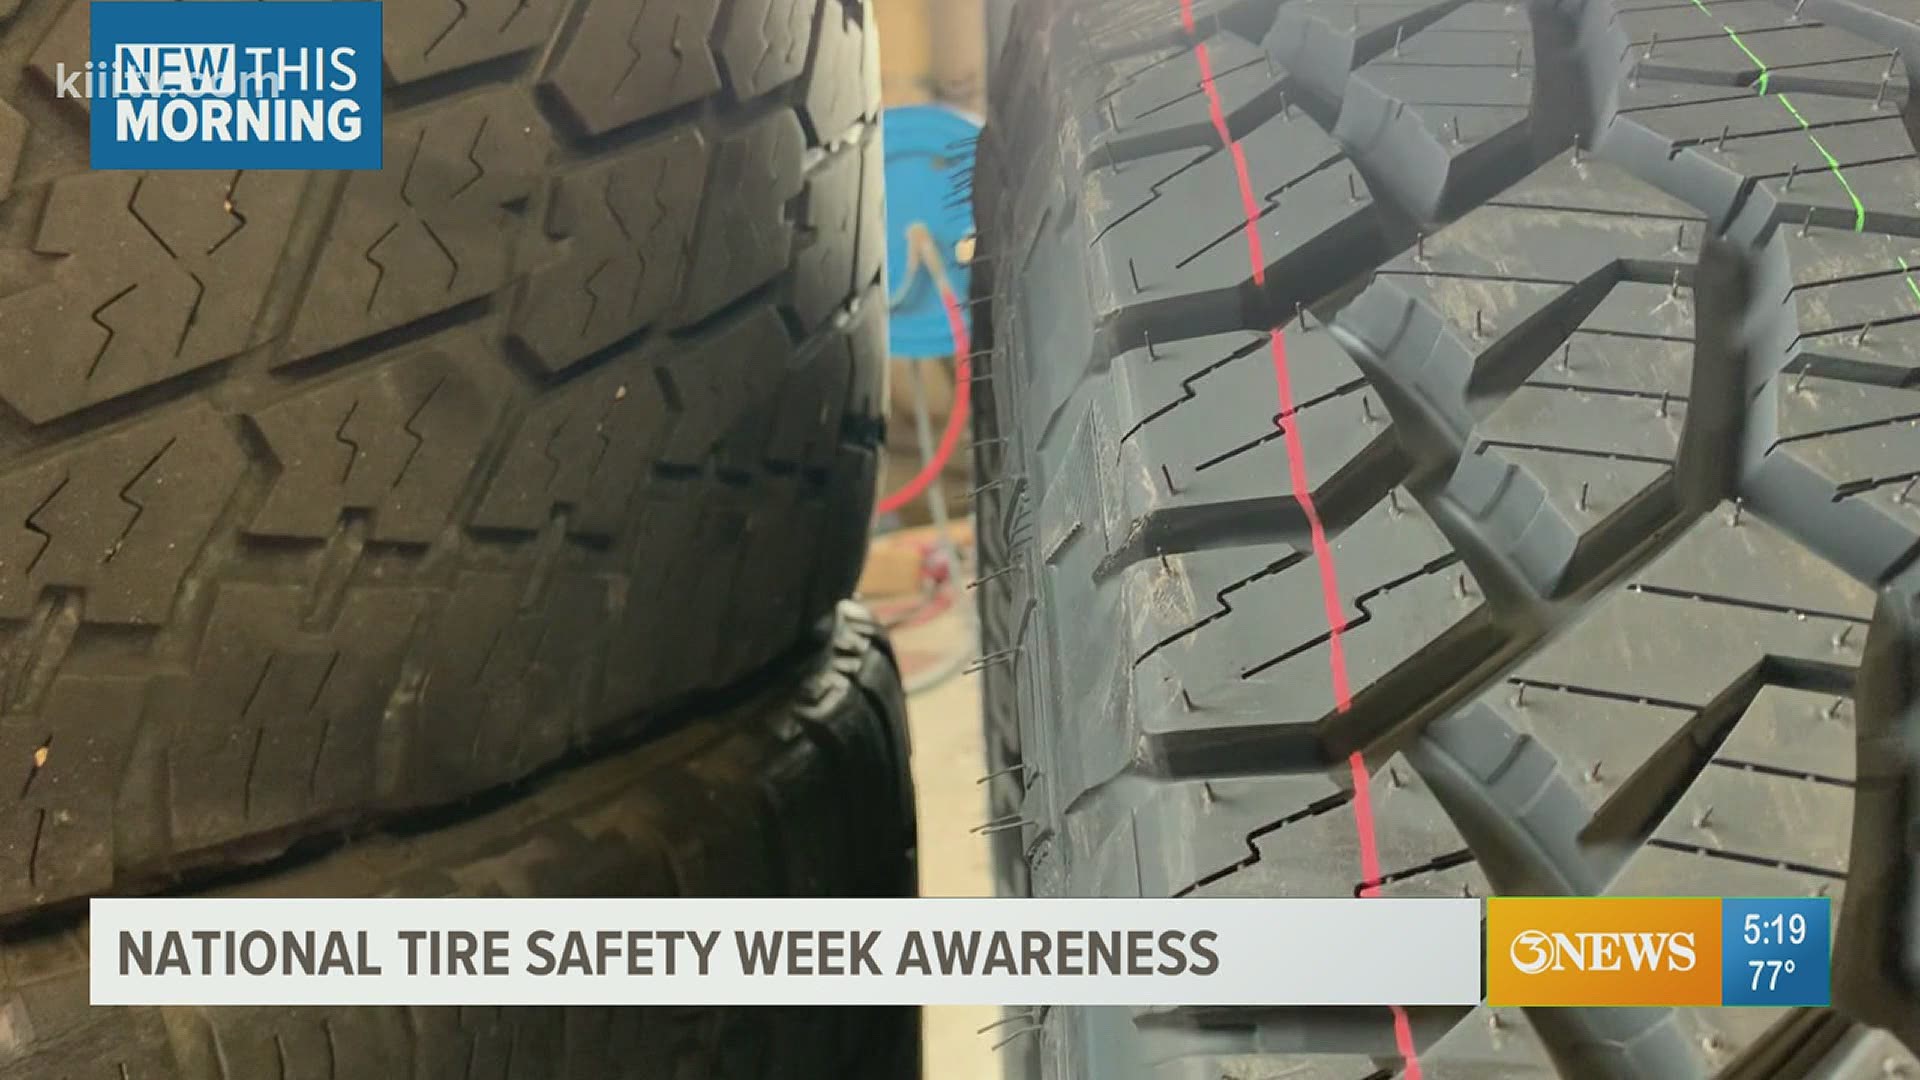 National tire safety week awareness